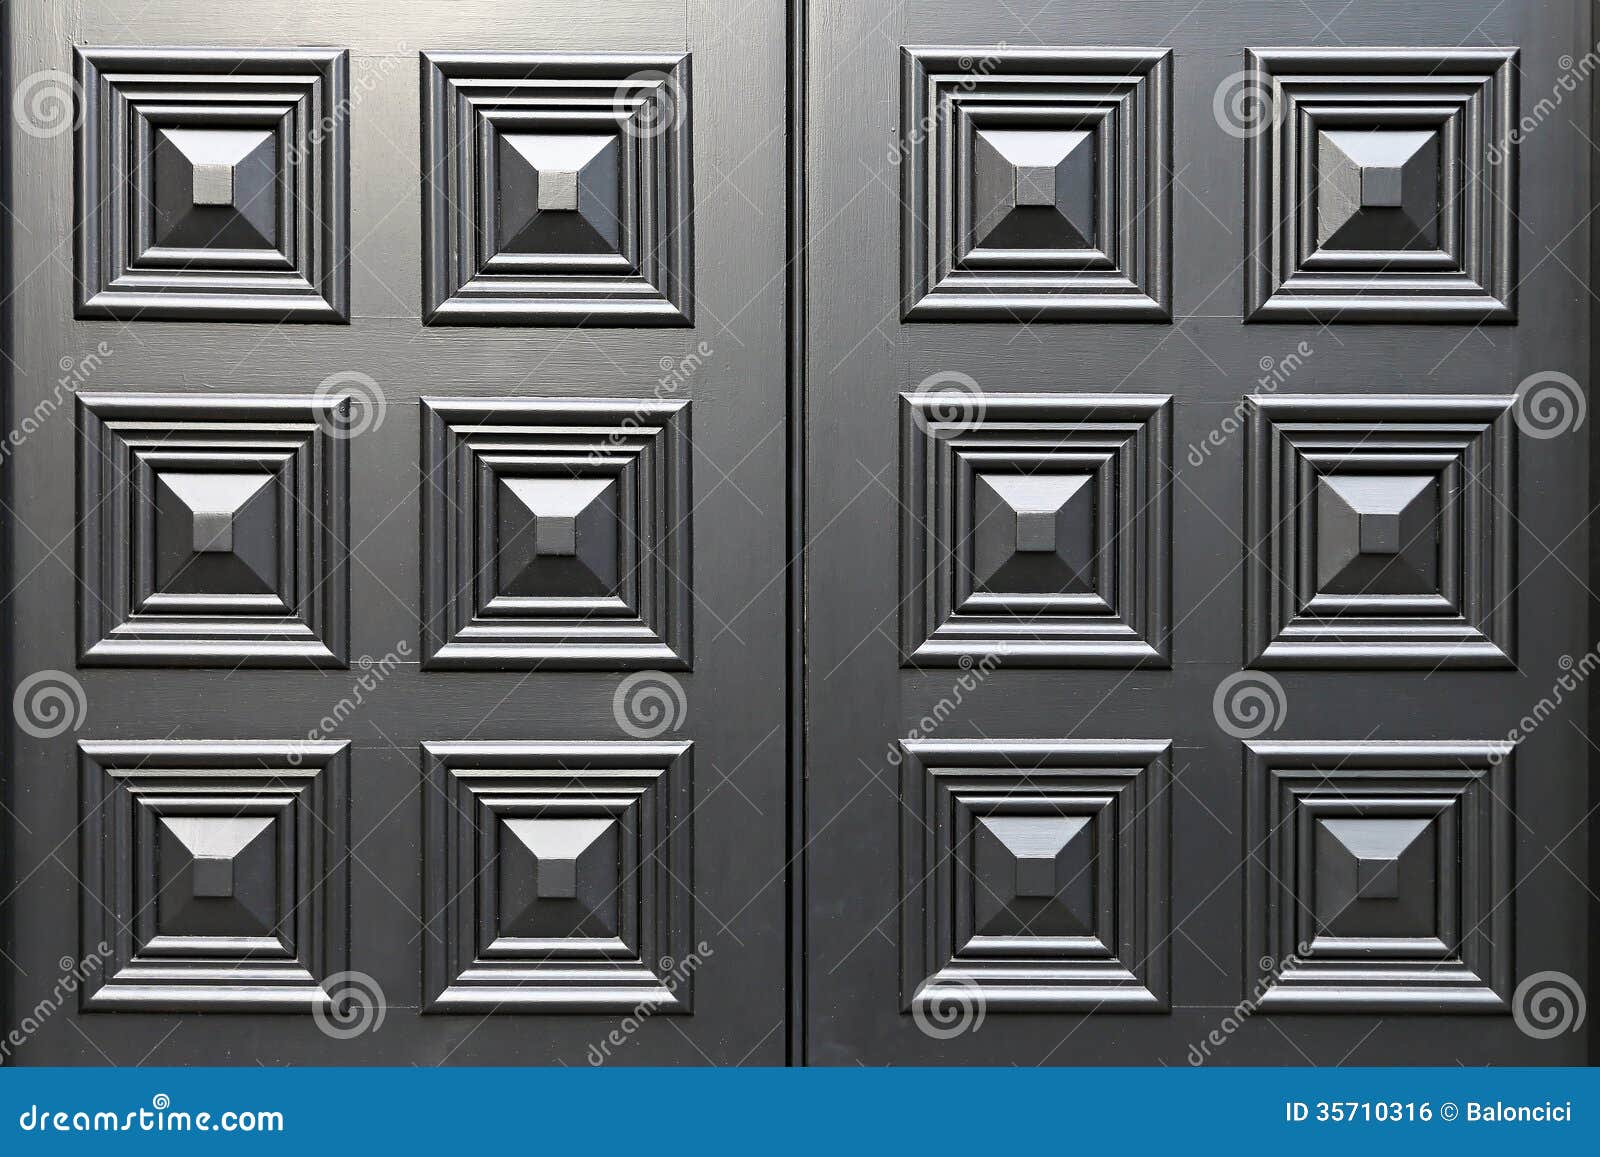 Black Door Panel Royalty Free Stock Image  Image: 35710316